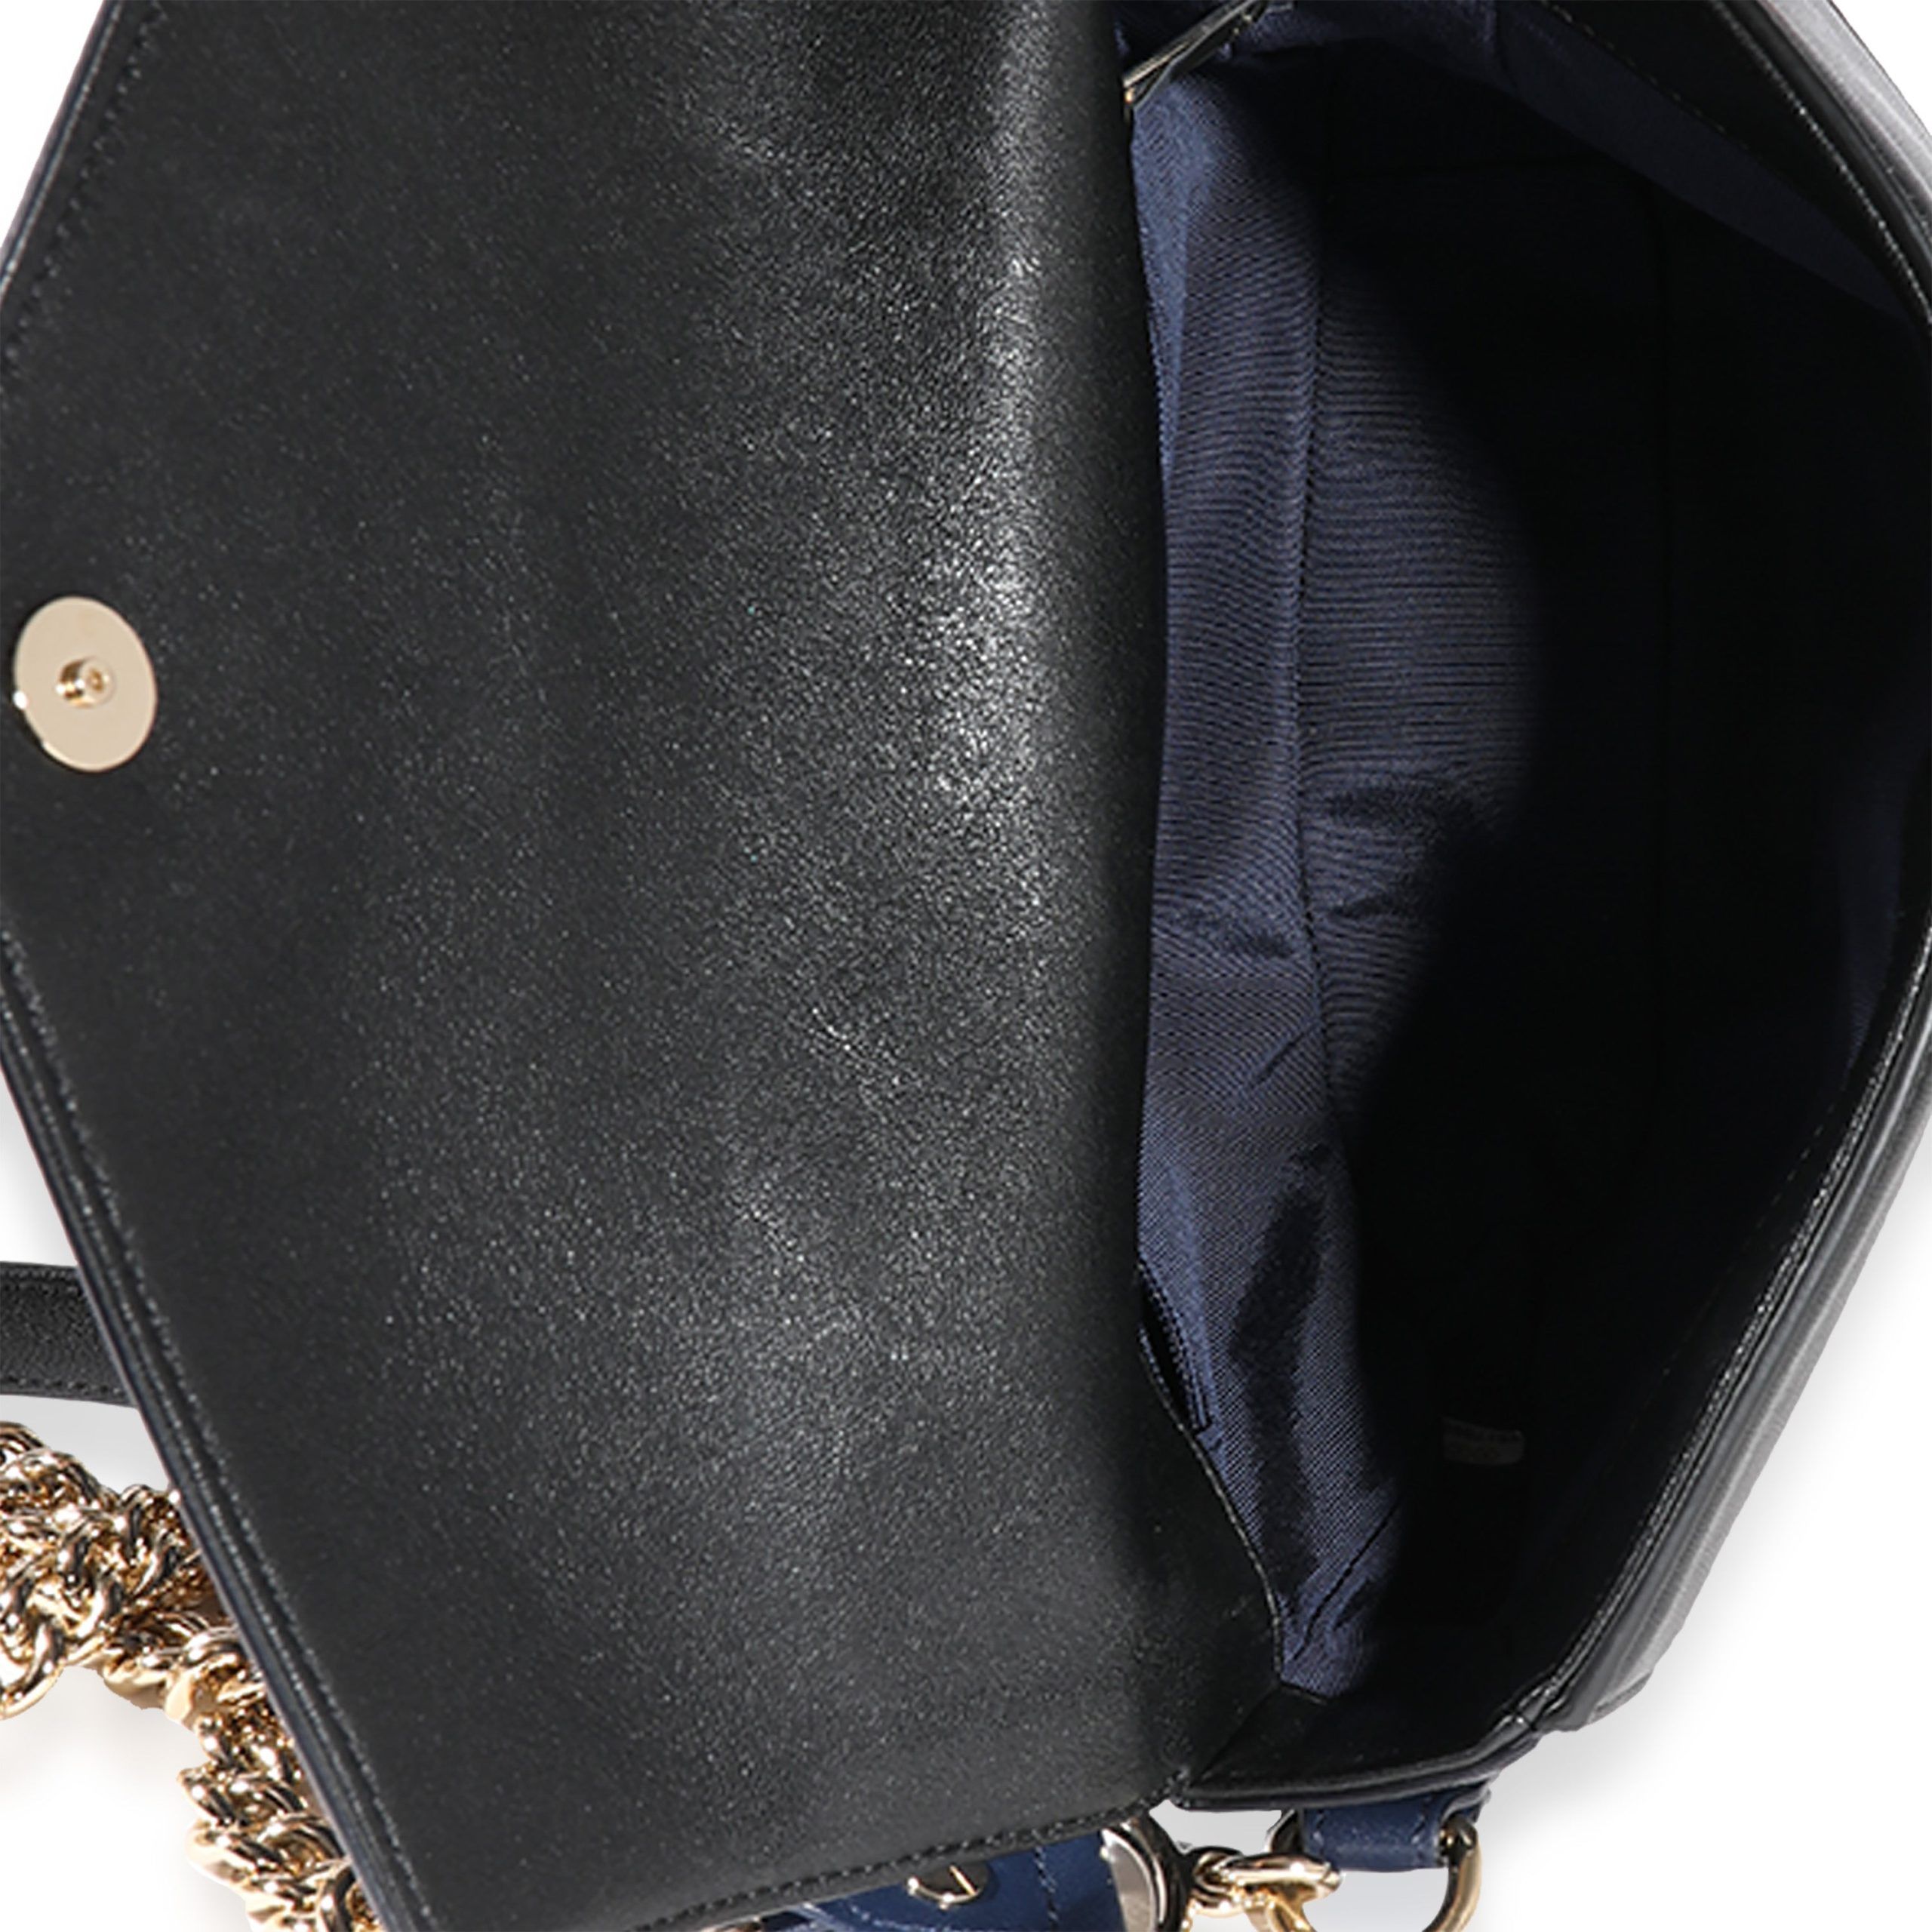 Chanel Chanel Blue & Black Chevron Calfskin Double Envelope Flap Bag Size ONE SIZE - 3 Preview